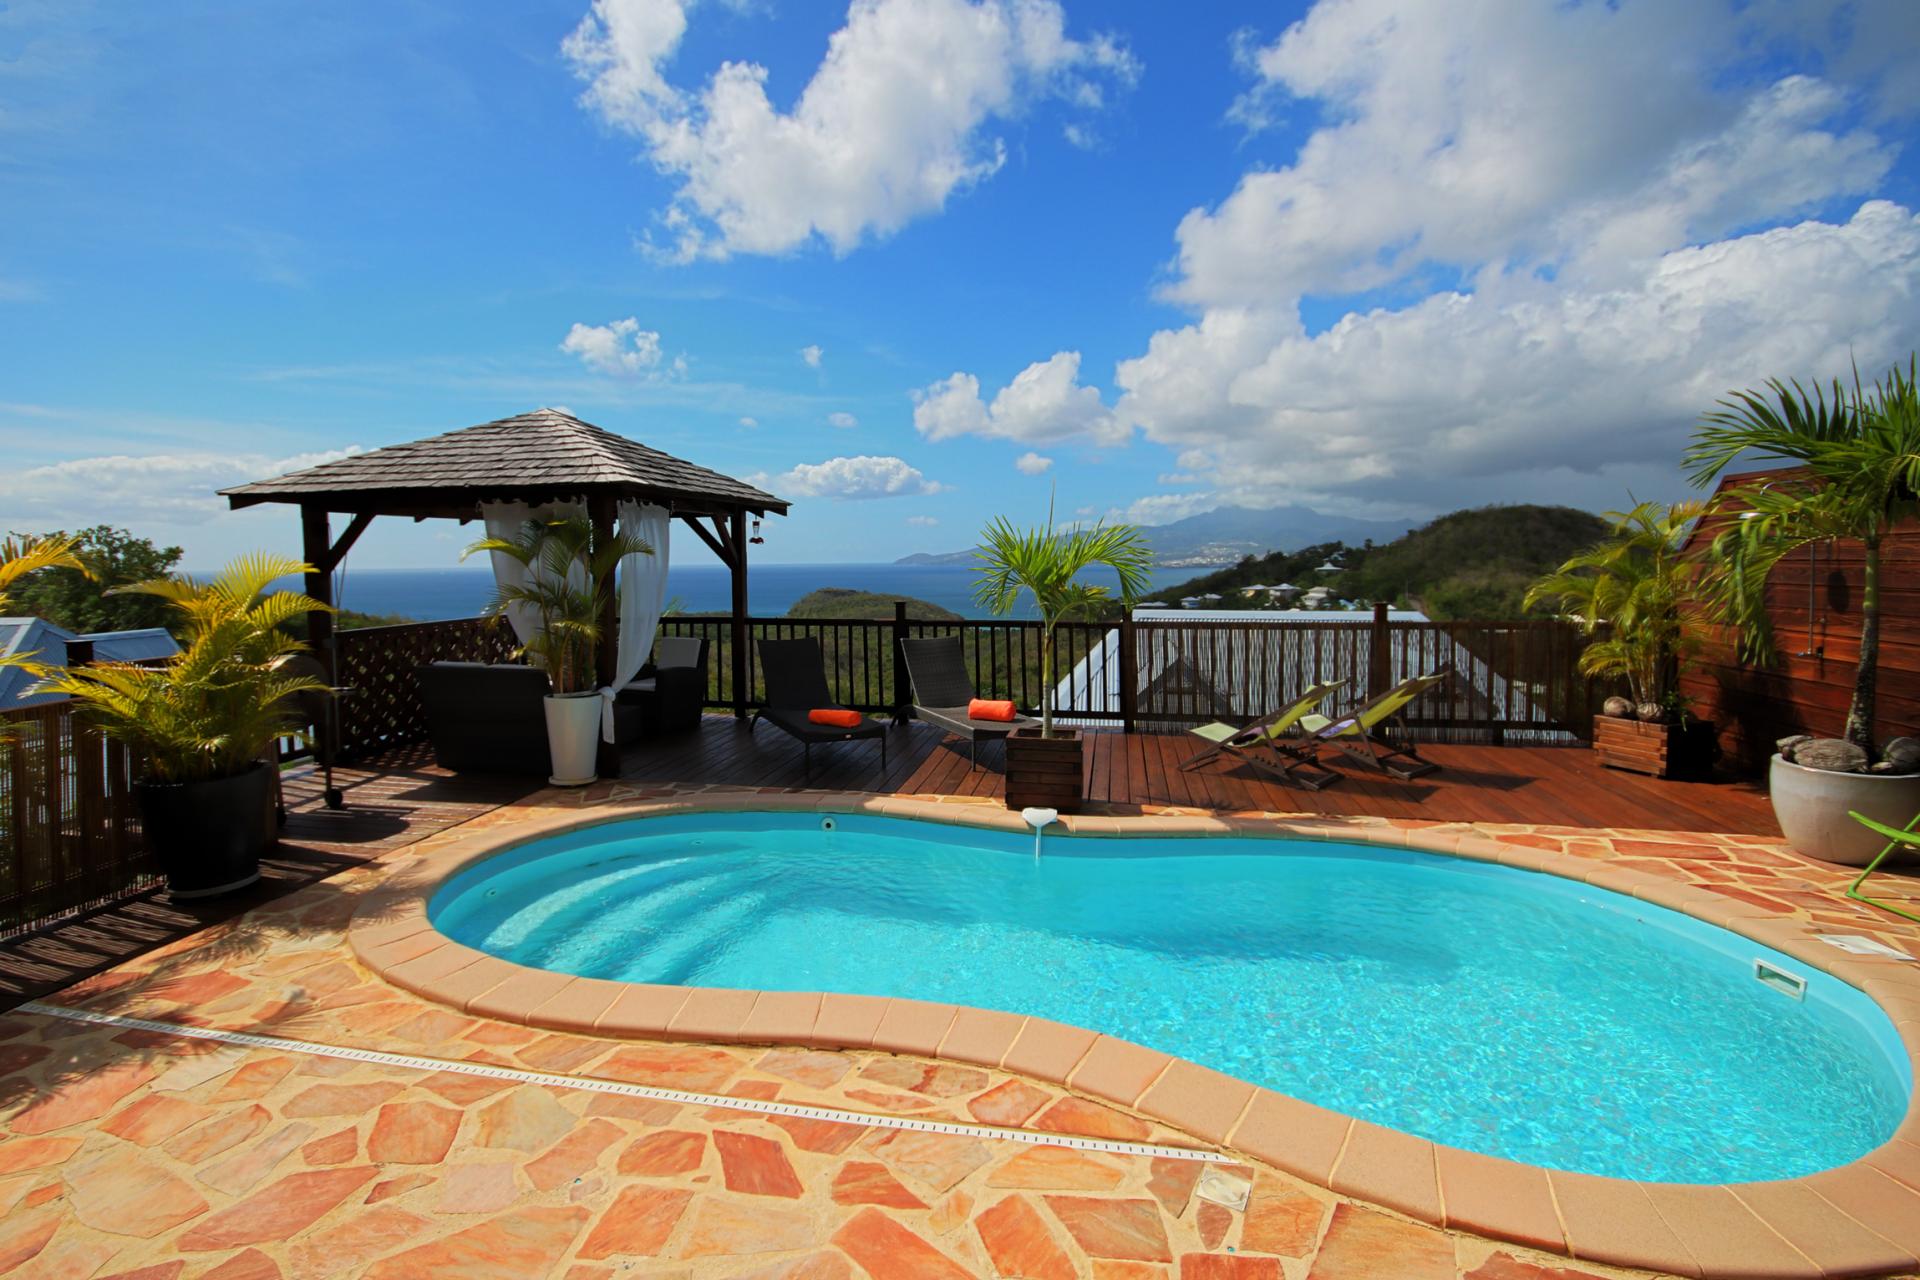 Location villa Trois Ilets Martinique - Piscine et vue mer